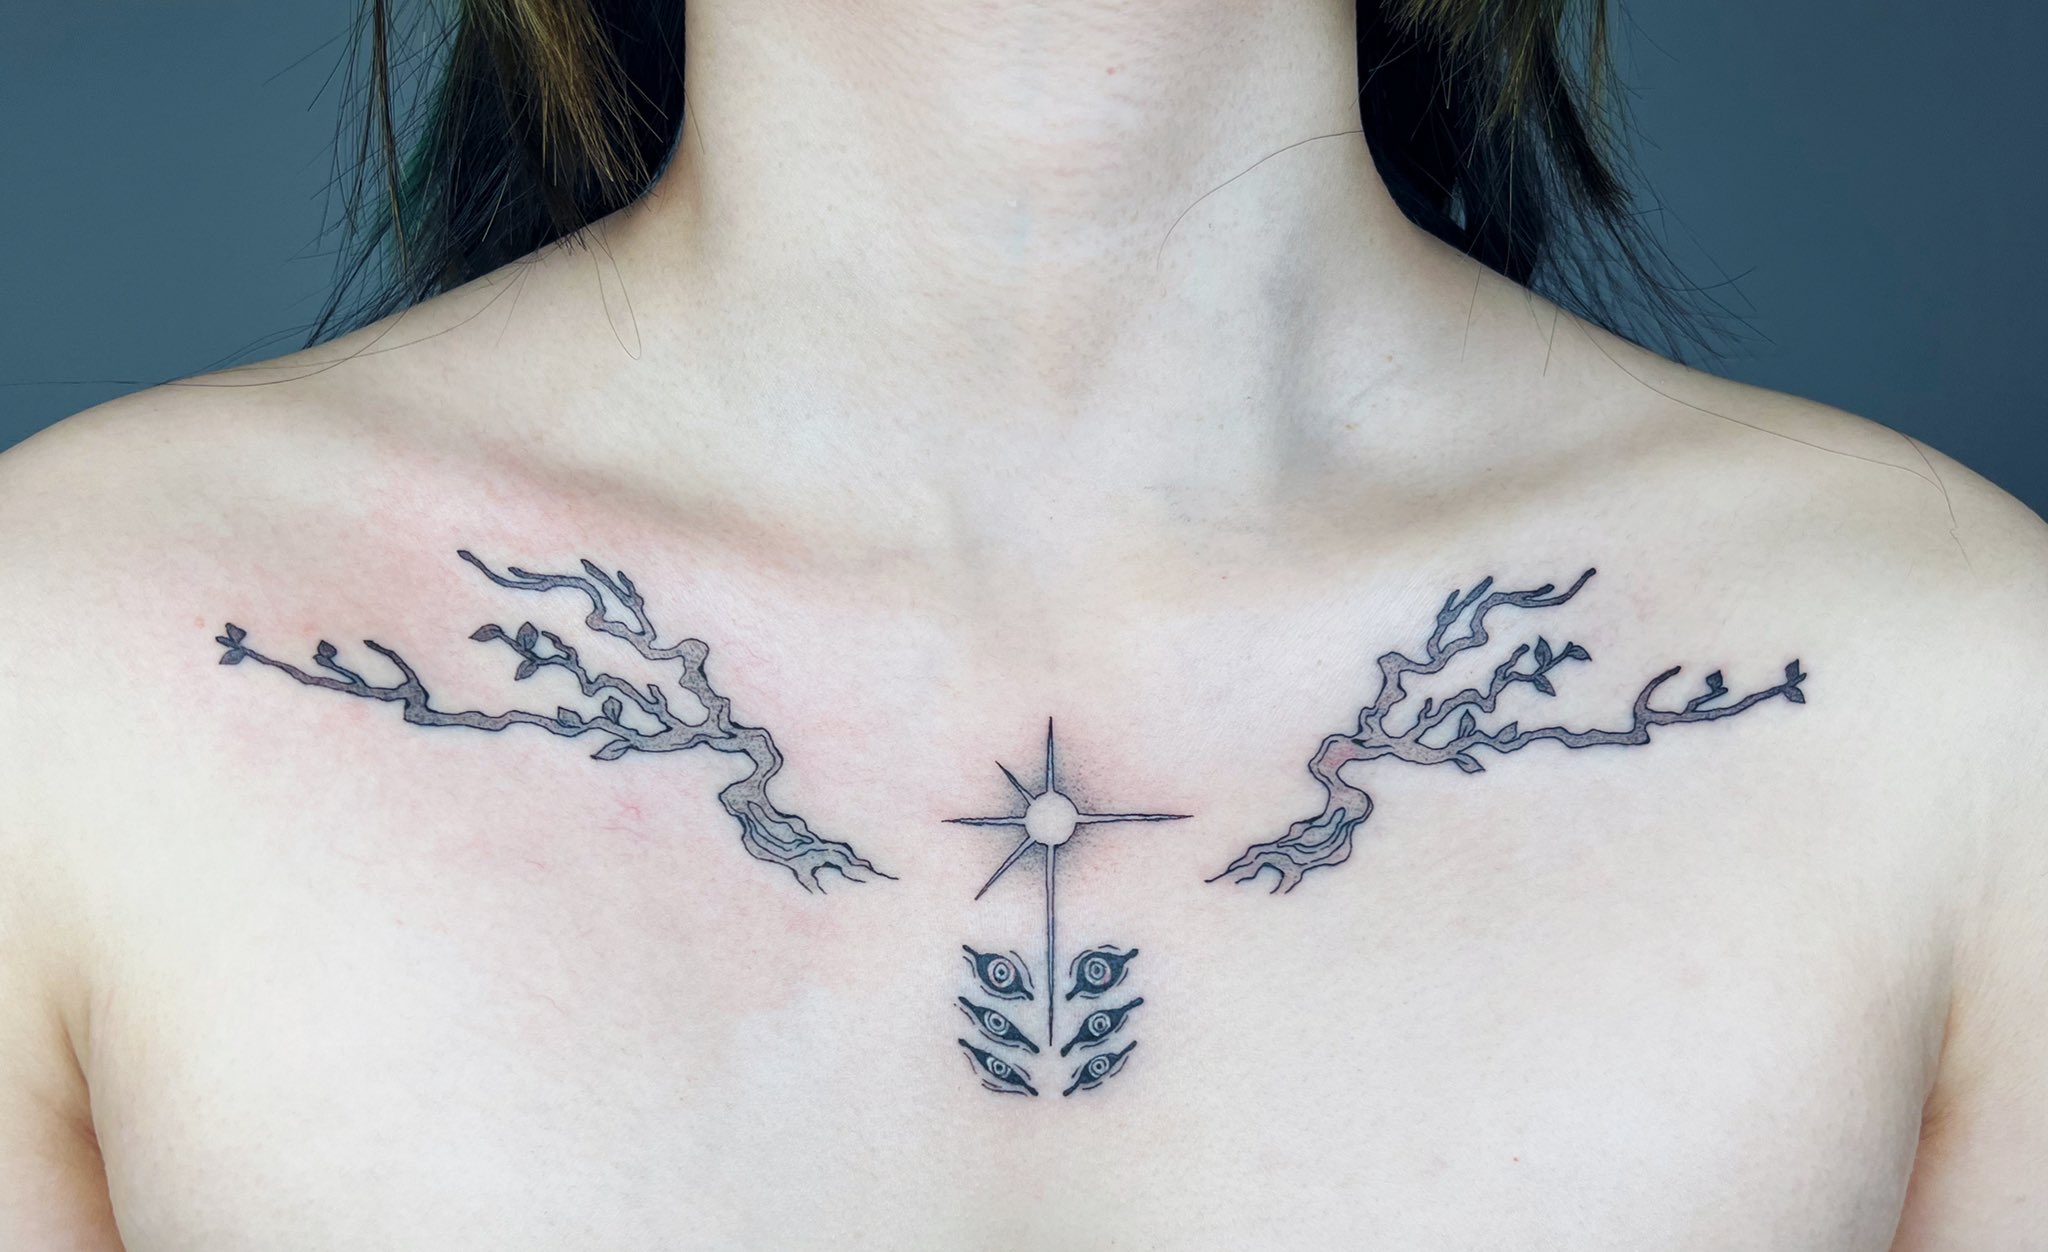 Liya/mochipanko on X: "Some recent chainsaw man tattoos ⛓ https://t.co/SVsW5OZBHa" / X